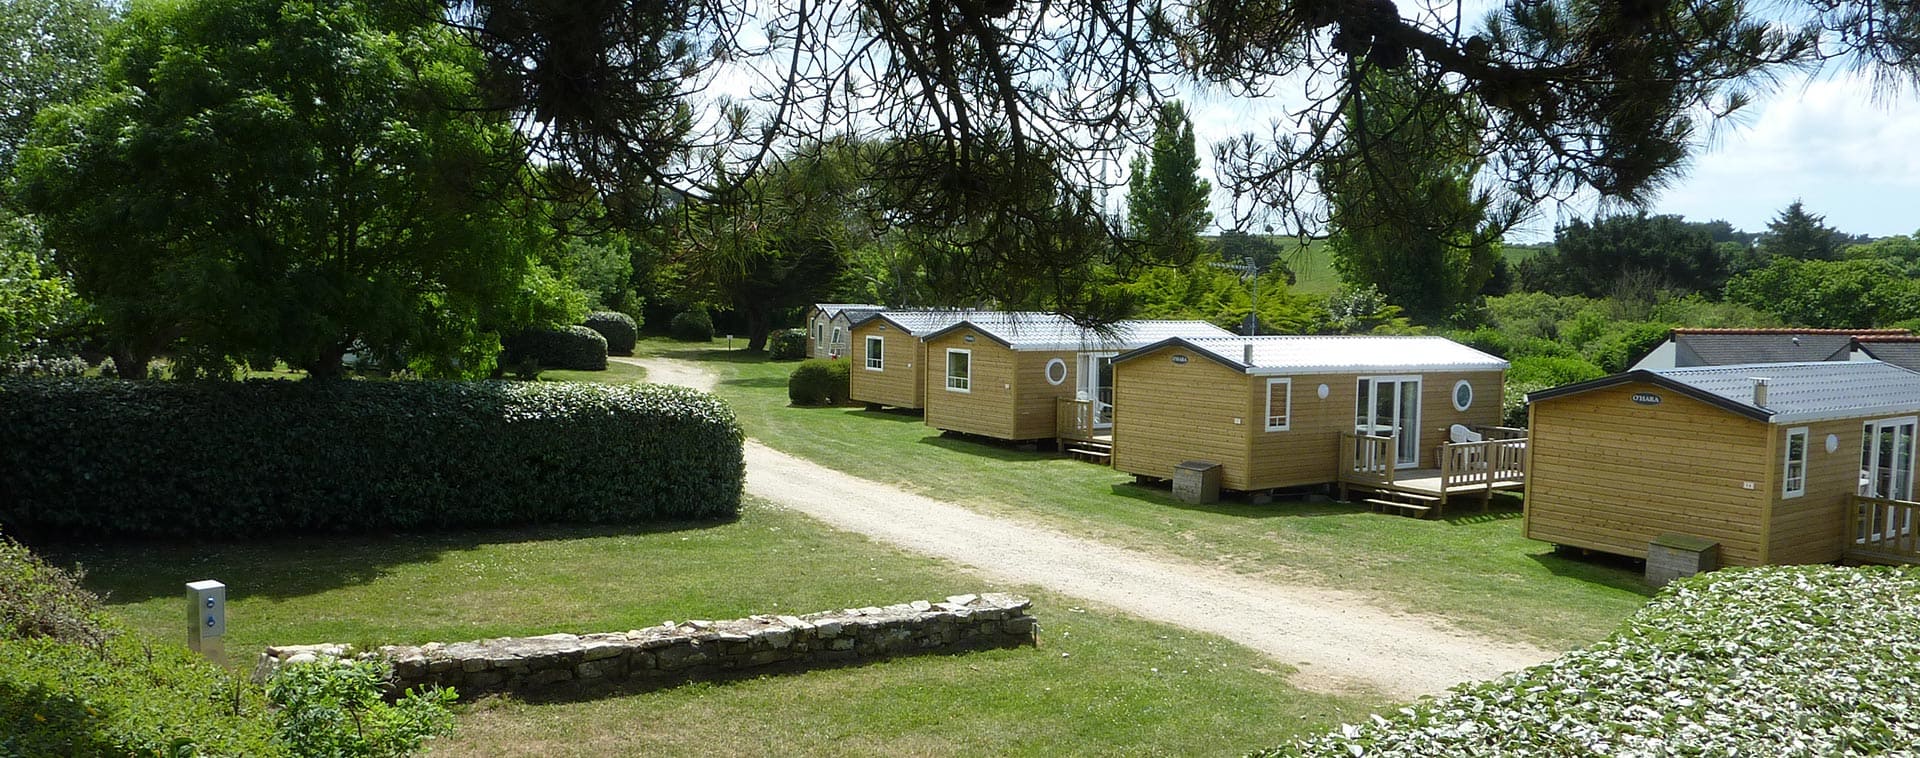 Camping Pors Peron, location de mobil-home en Bretagne